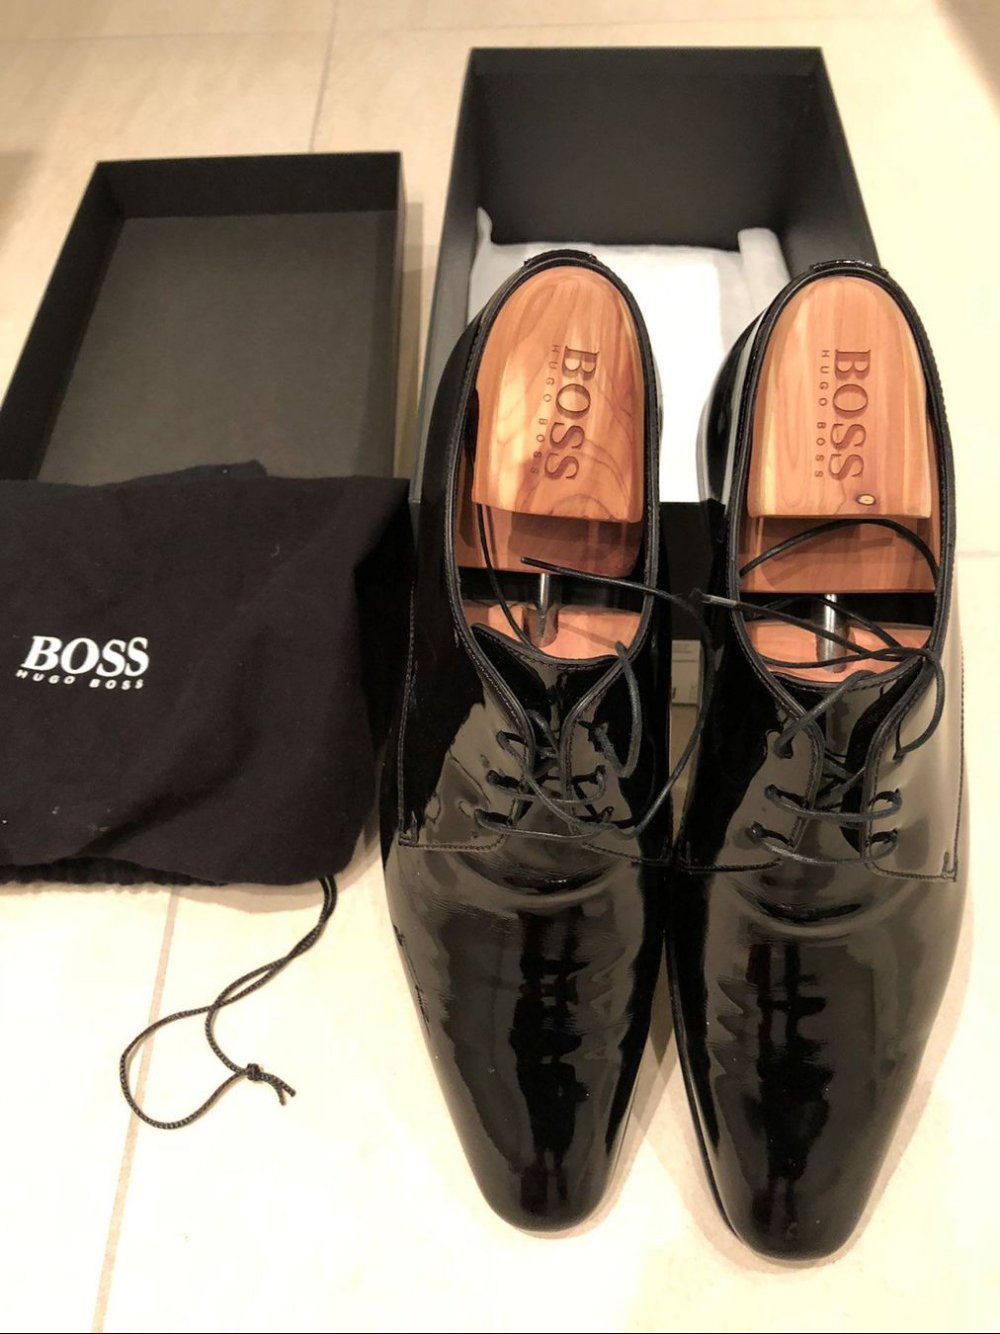 hugo boss shoes & accessories italia spa